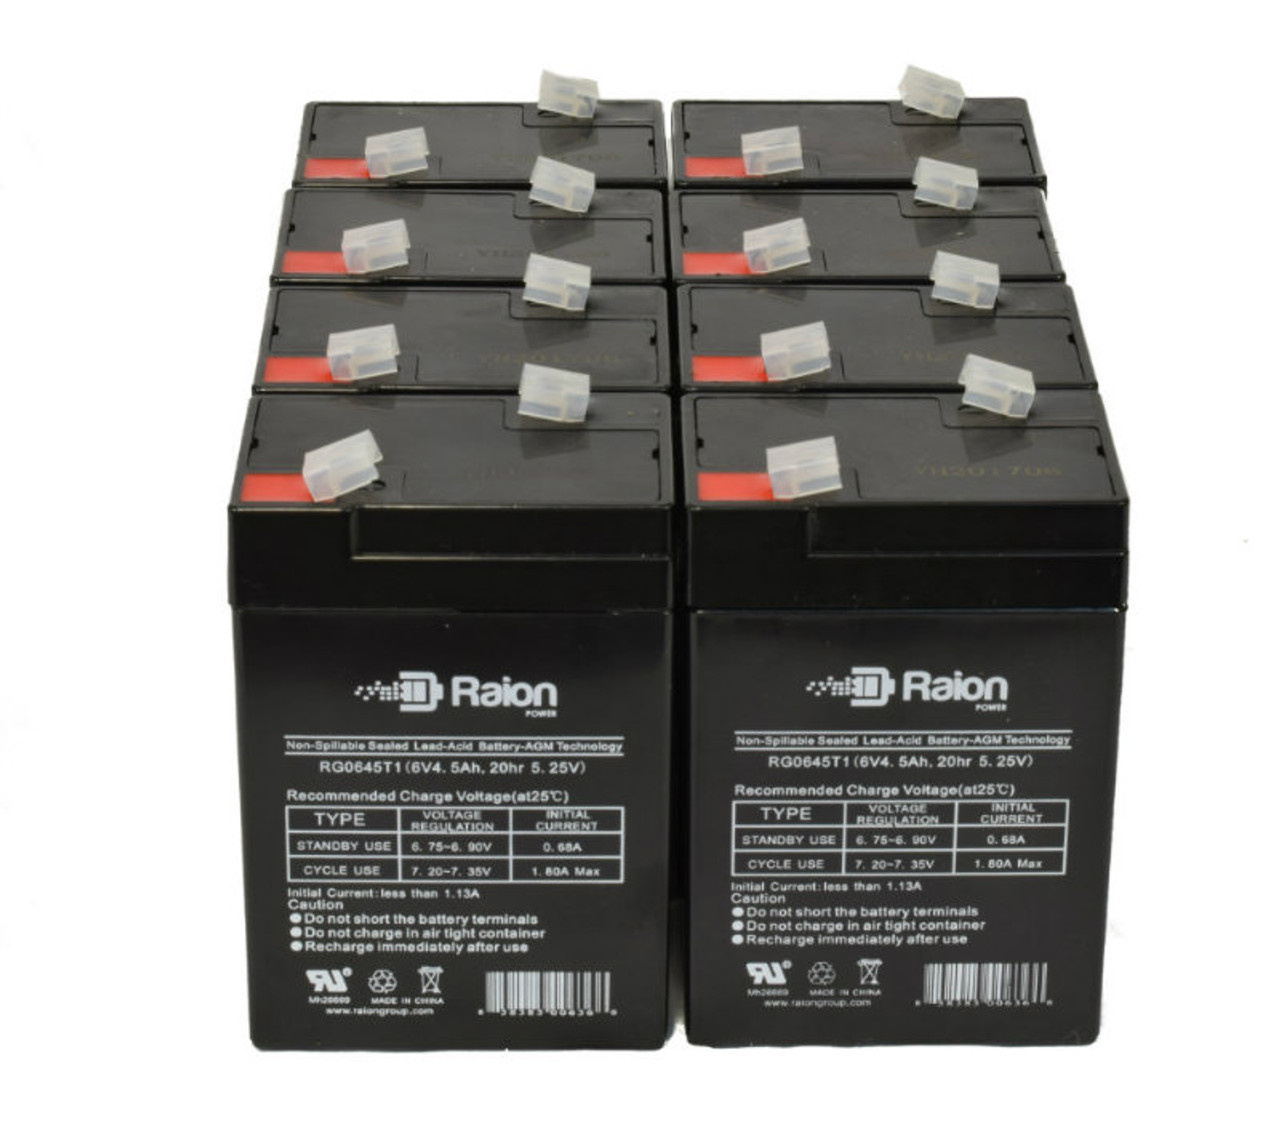 Raion Power 6V 4.5Ah Replacement Emergency Light Battery for Prescolite 12-706 - 8 Pack